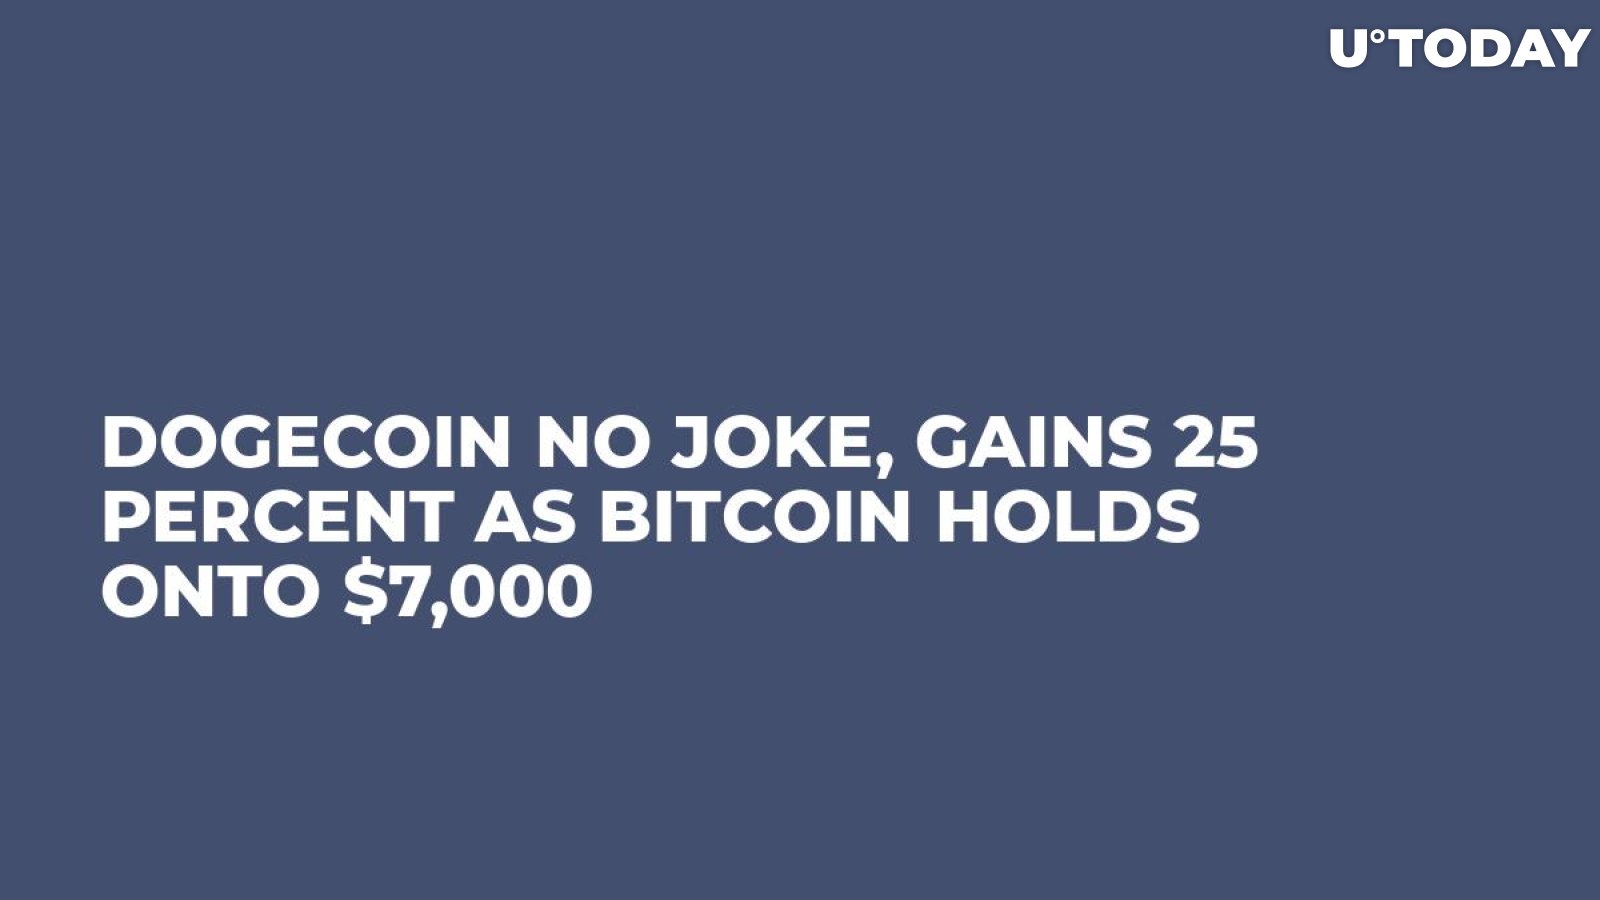 Dogecoin No Joke, Gains 25 Percent as Bitcoin Holds Onto $7,000